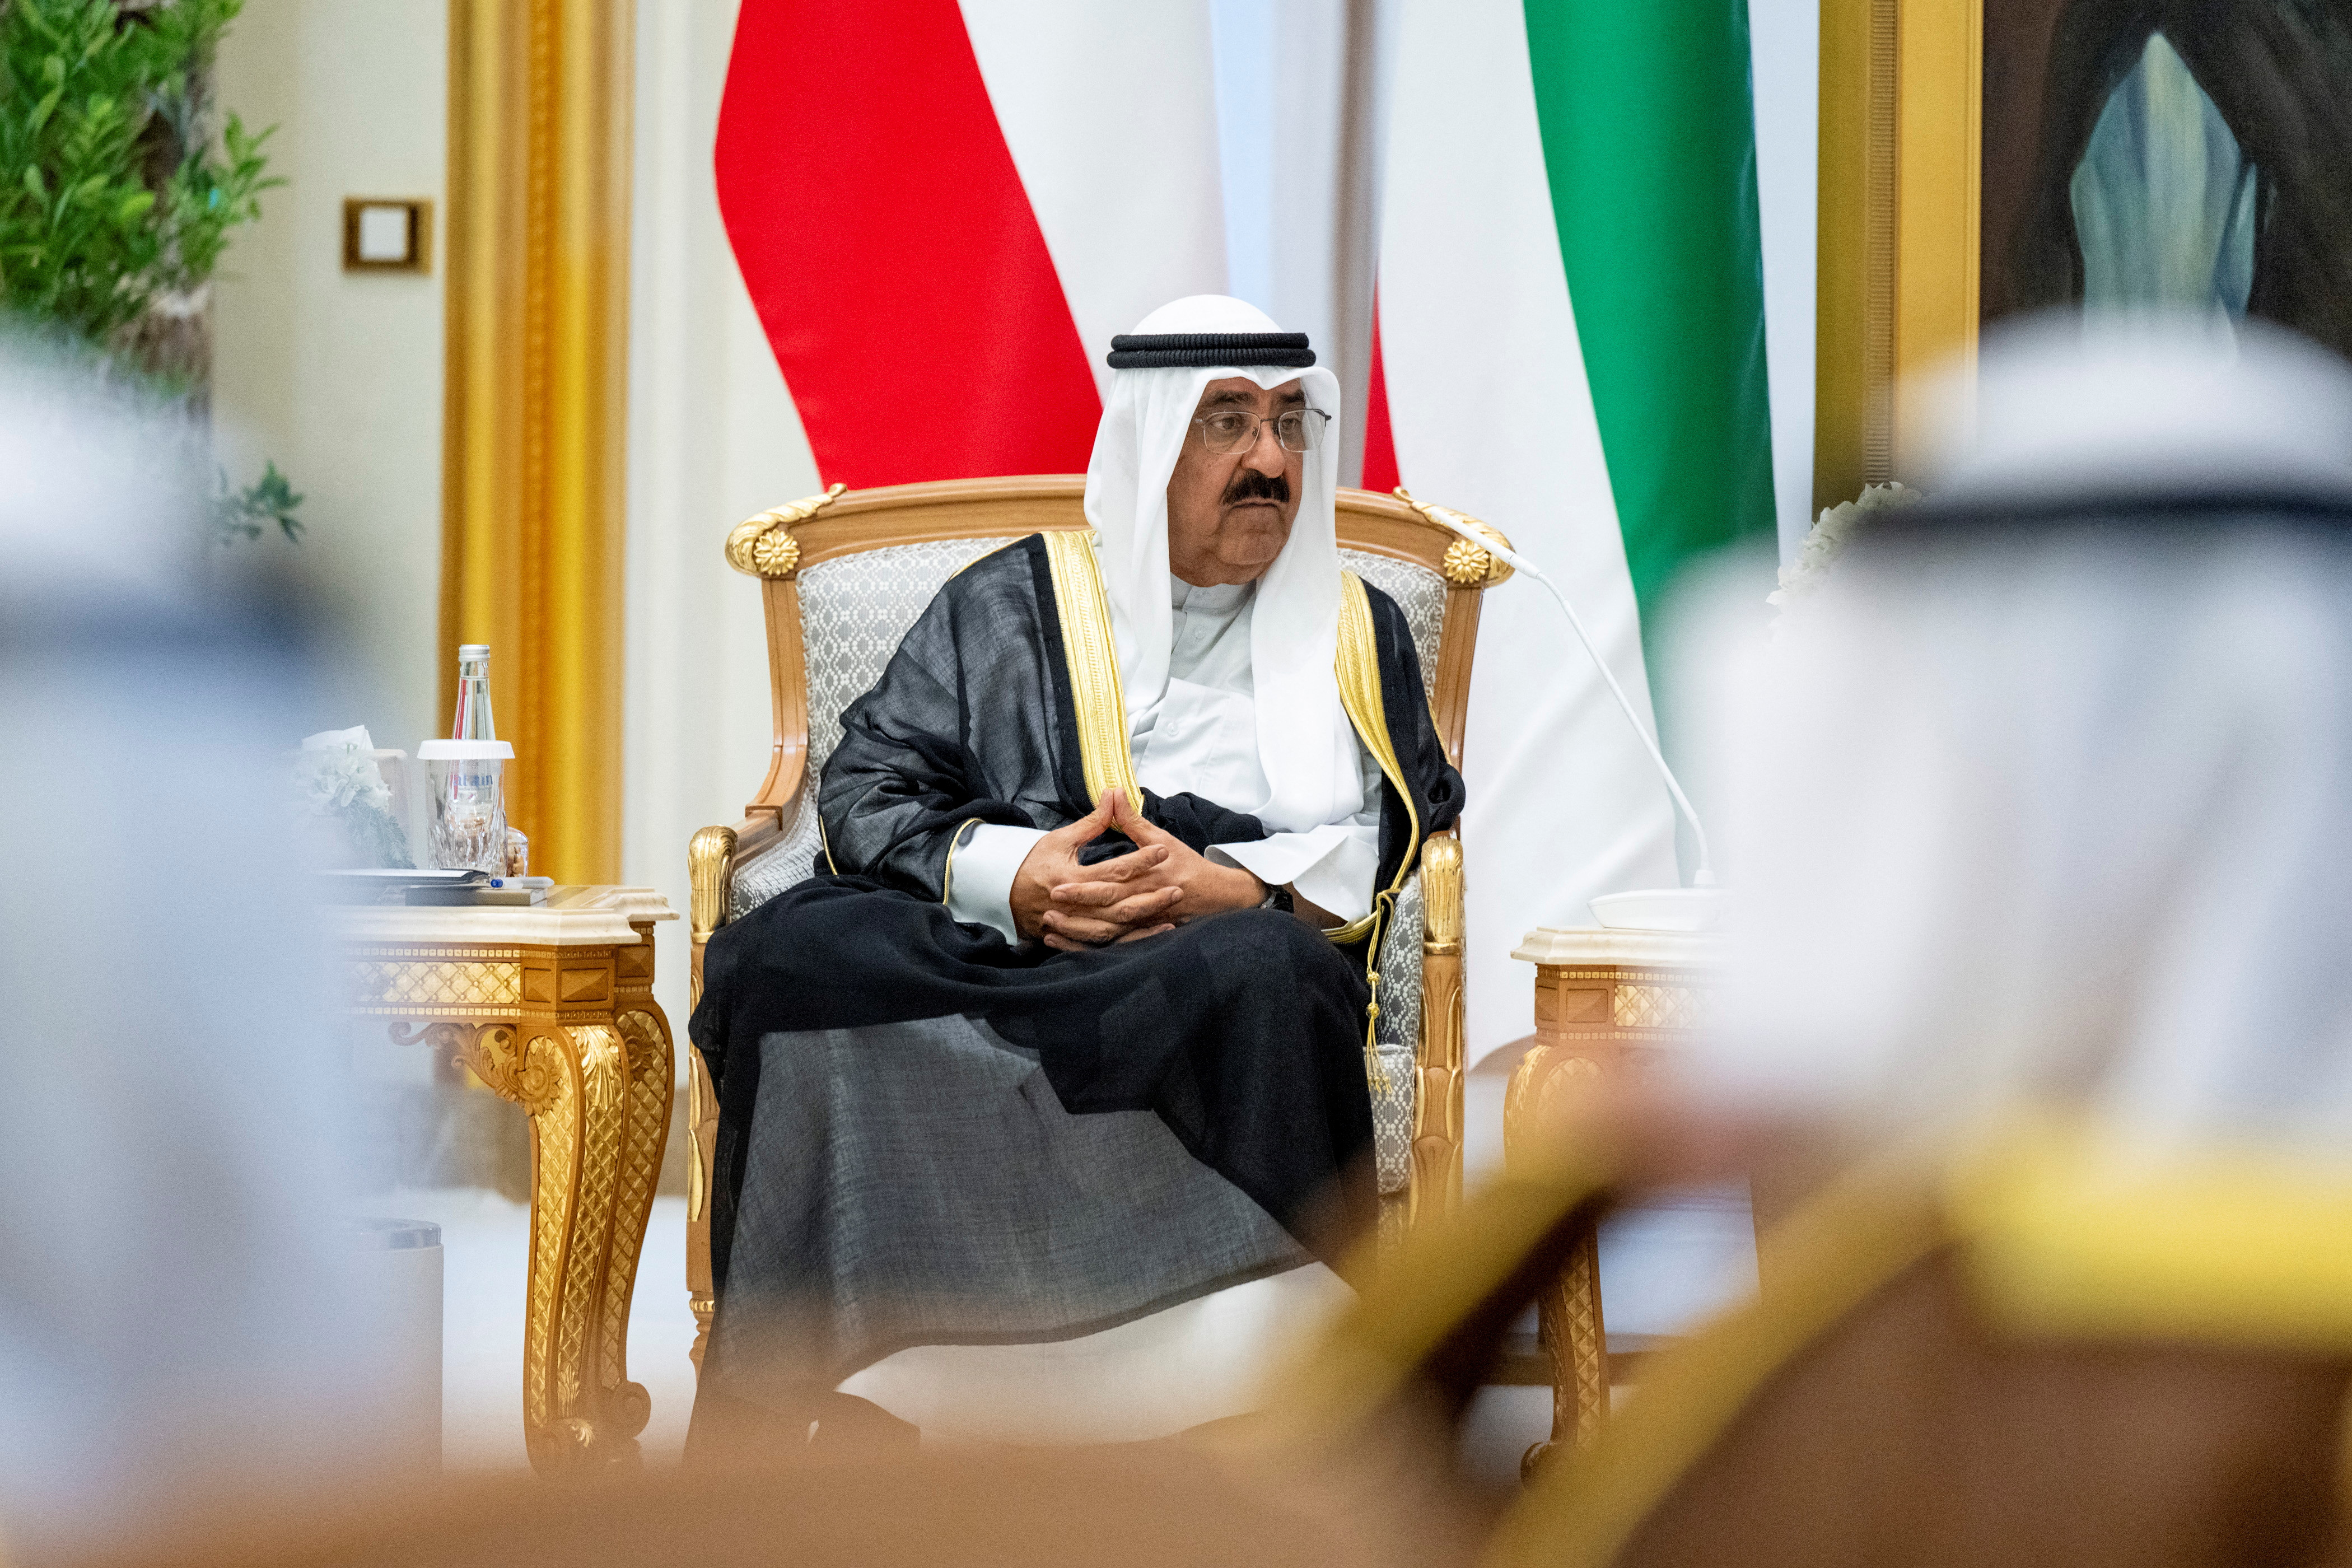 Kuwait's Emir Sheikh Meshal Al Ahmad Al Jaber Al Sabah visits the United Arab Emirates